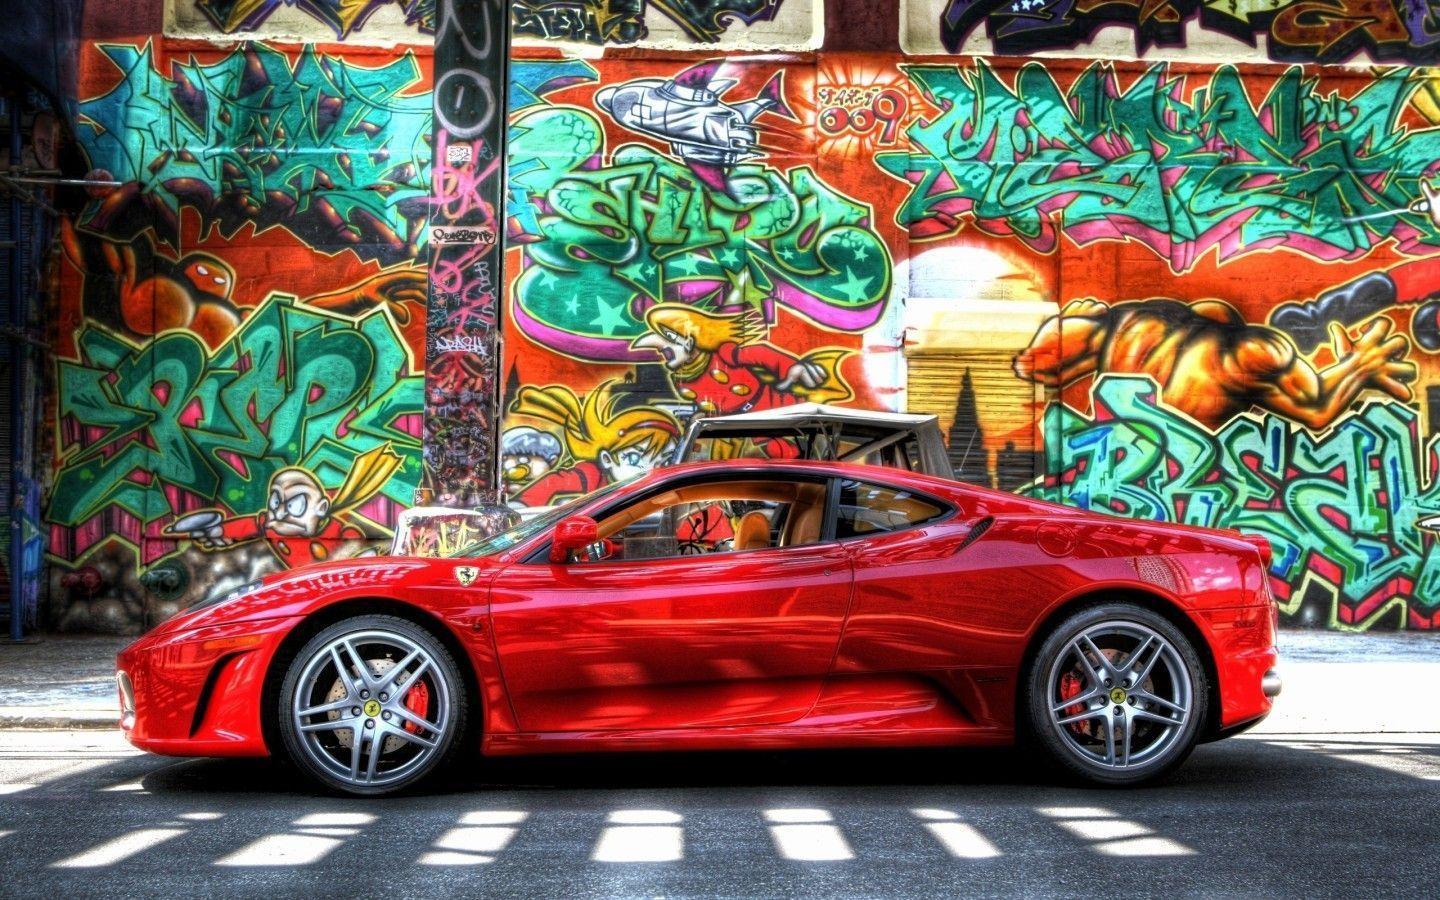 Red Ferrari in front of Graffiti Wall widescreen wallpaper. Wide